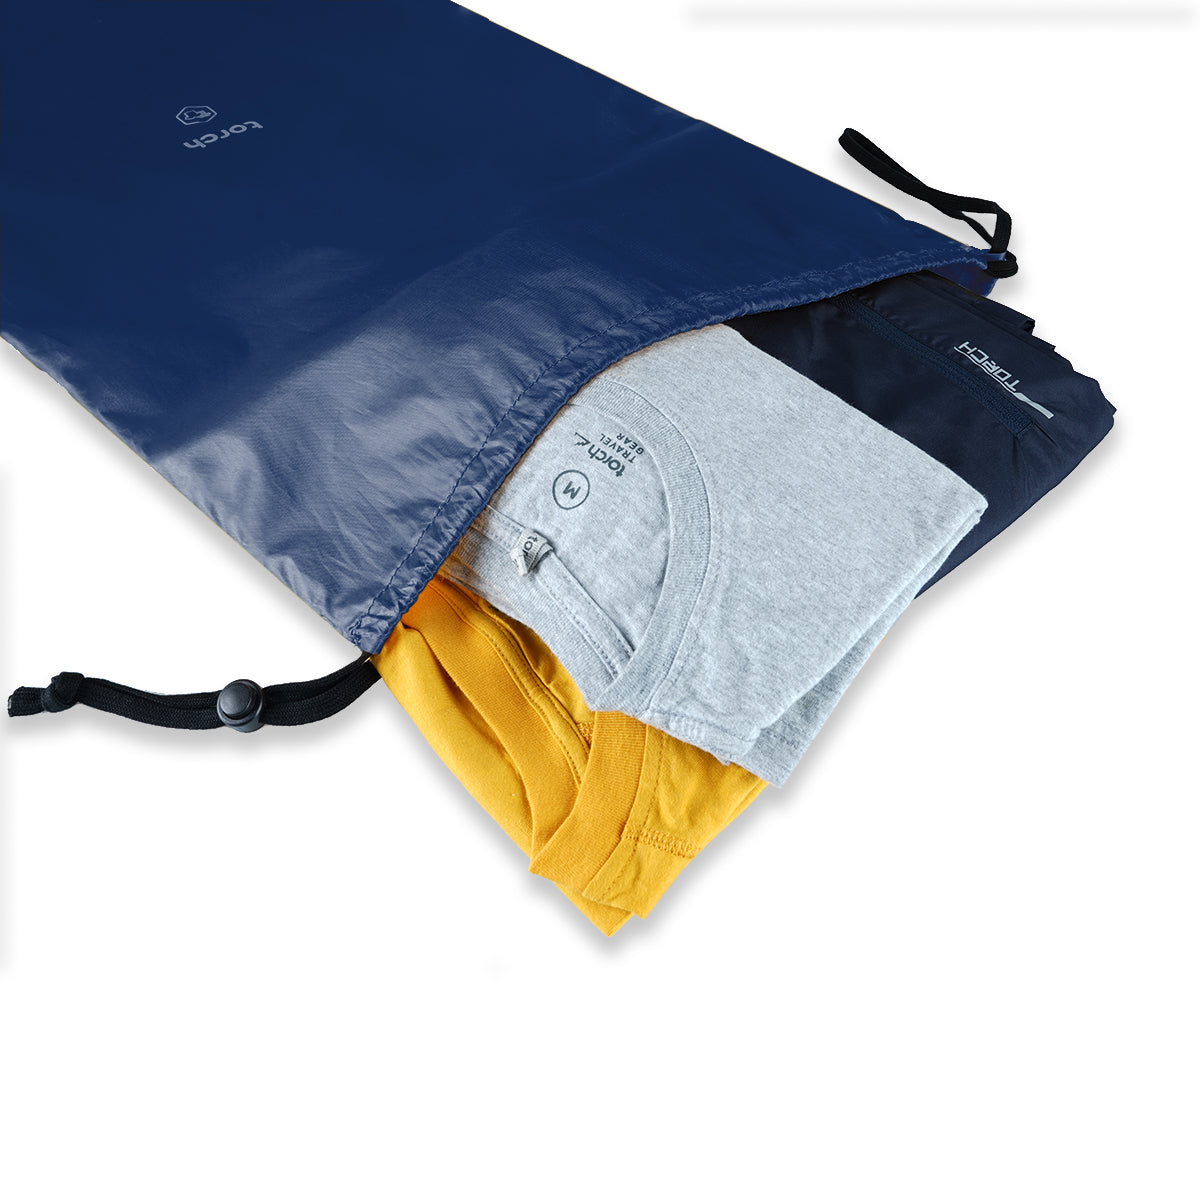 Paket Traveling - Dafi Cloth Pack L + Dafi Toiletries L Navy + Dafi Underwear Yellow  + Dafi Shoepack Yellow + Dafi Skincare Yellow + Dafi Drawstring L + Dafi Multipouch XL